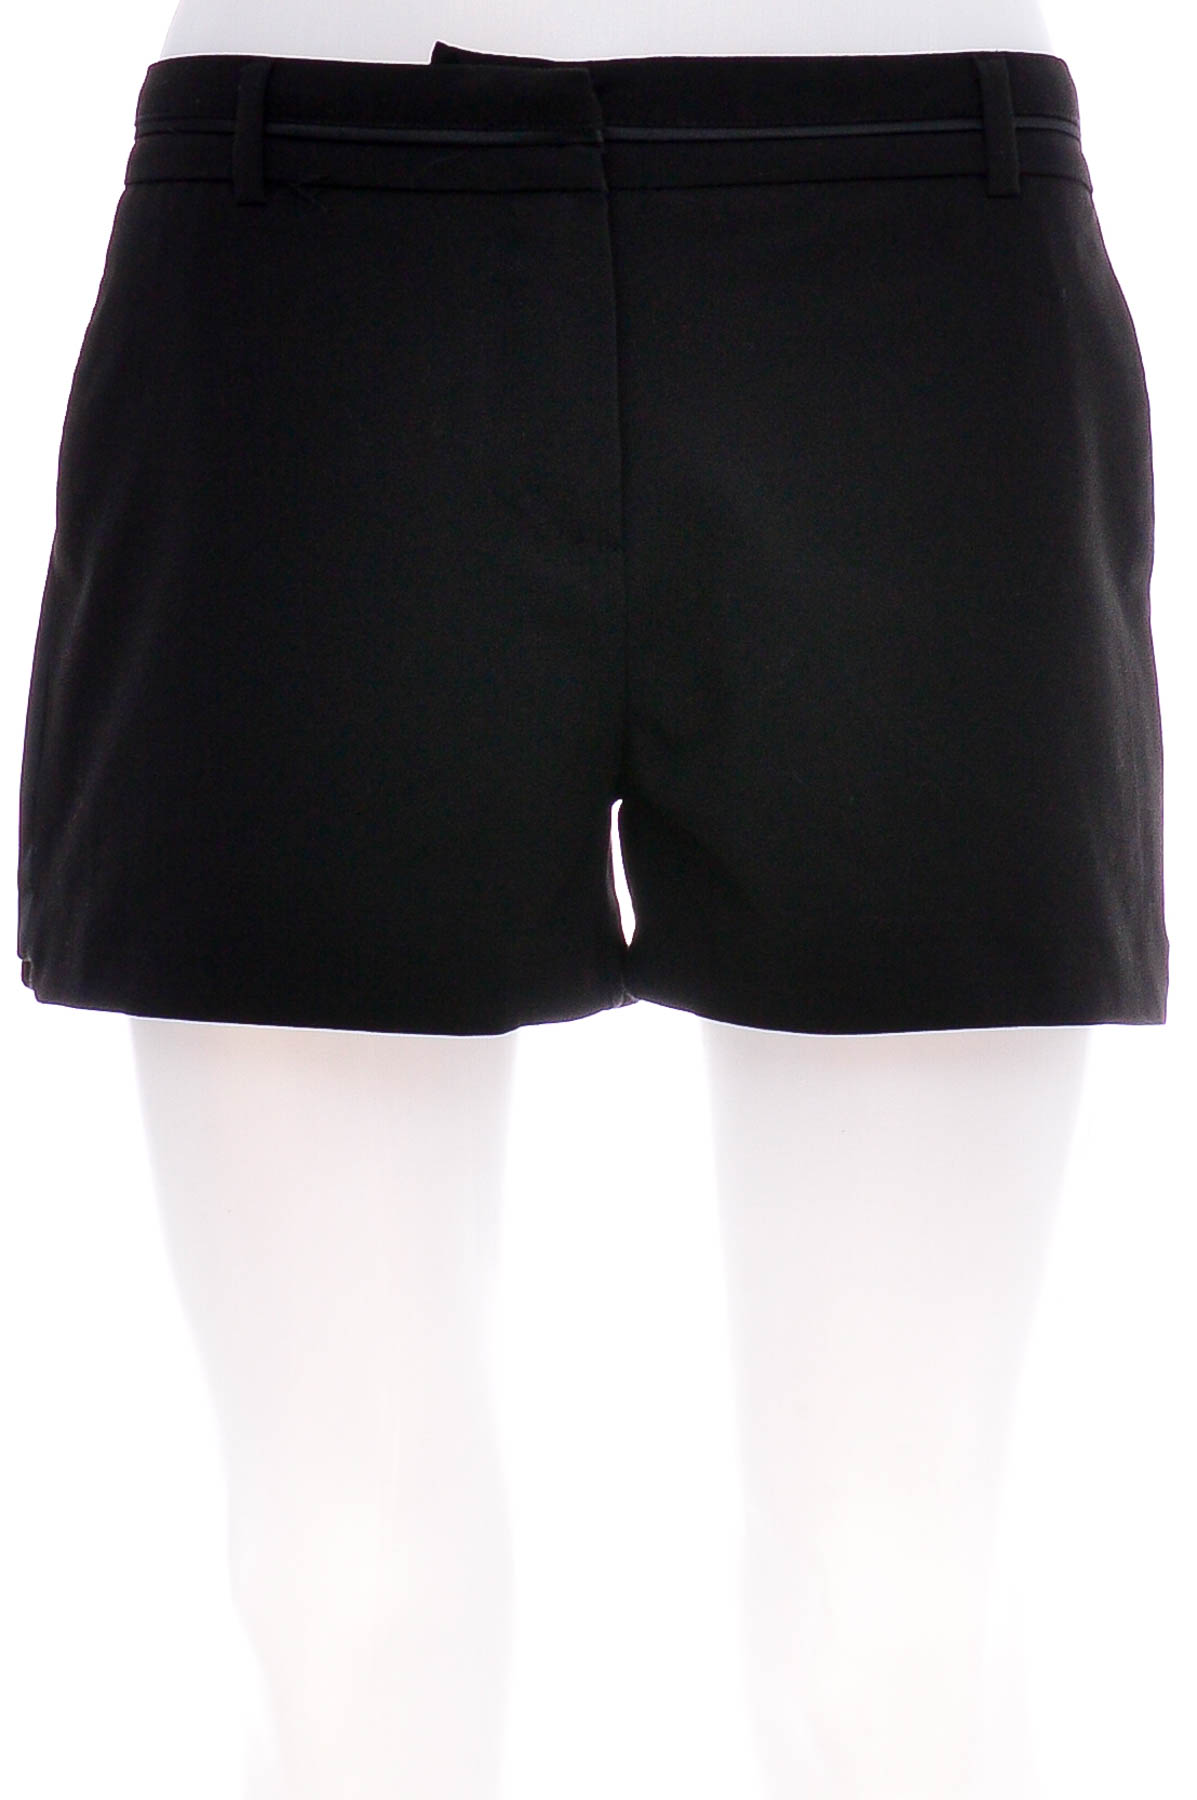 Female shorts - Camaieu - 0